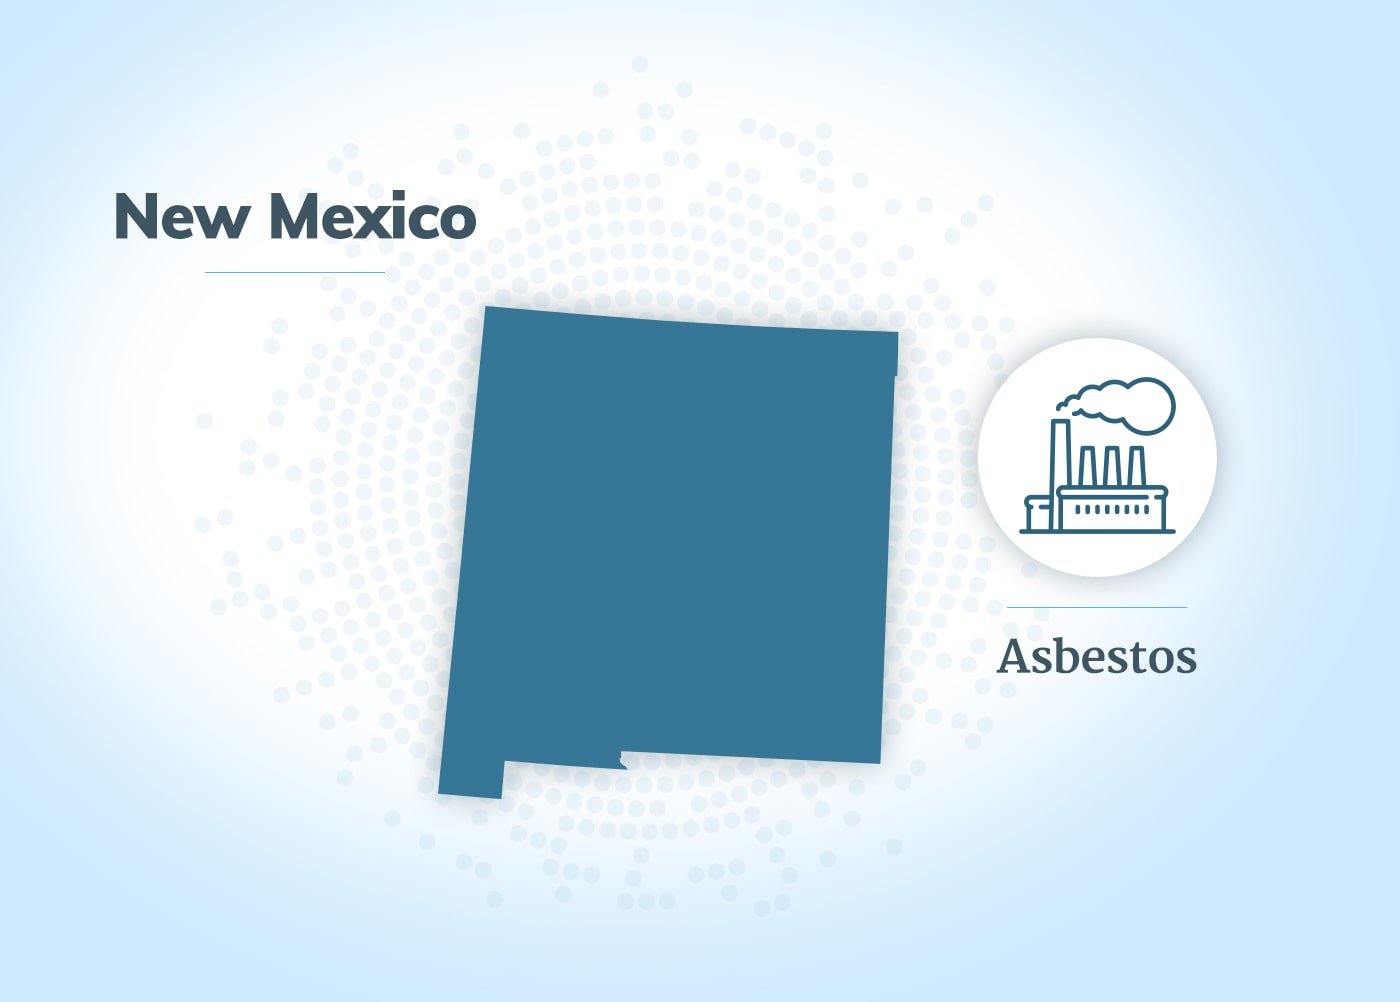 Asbestos exposure in New Mexico